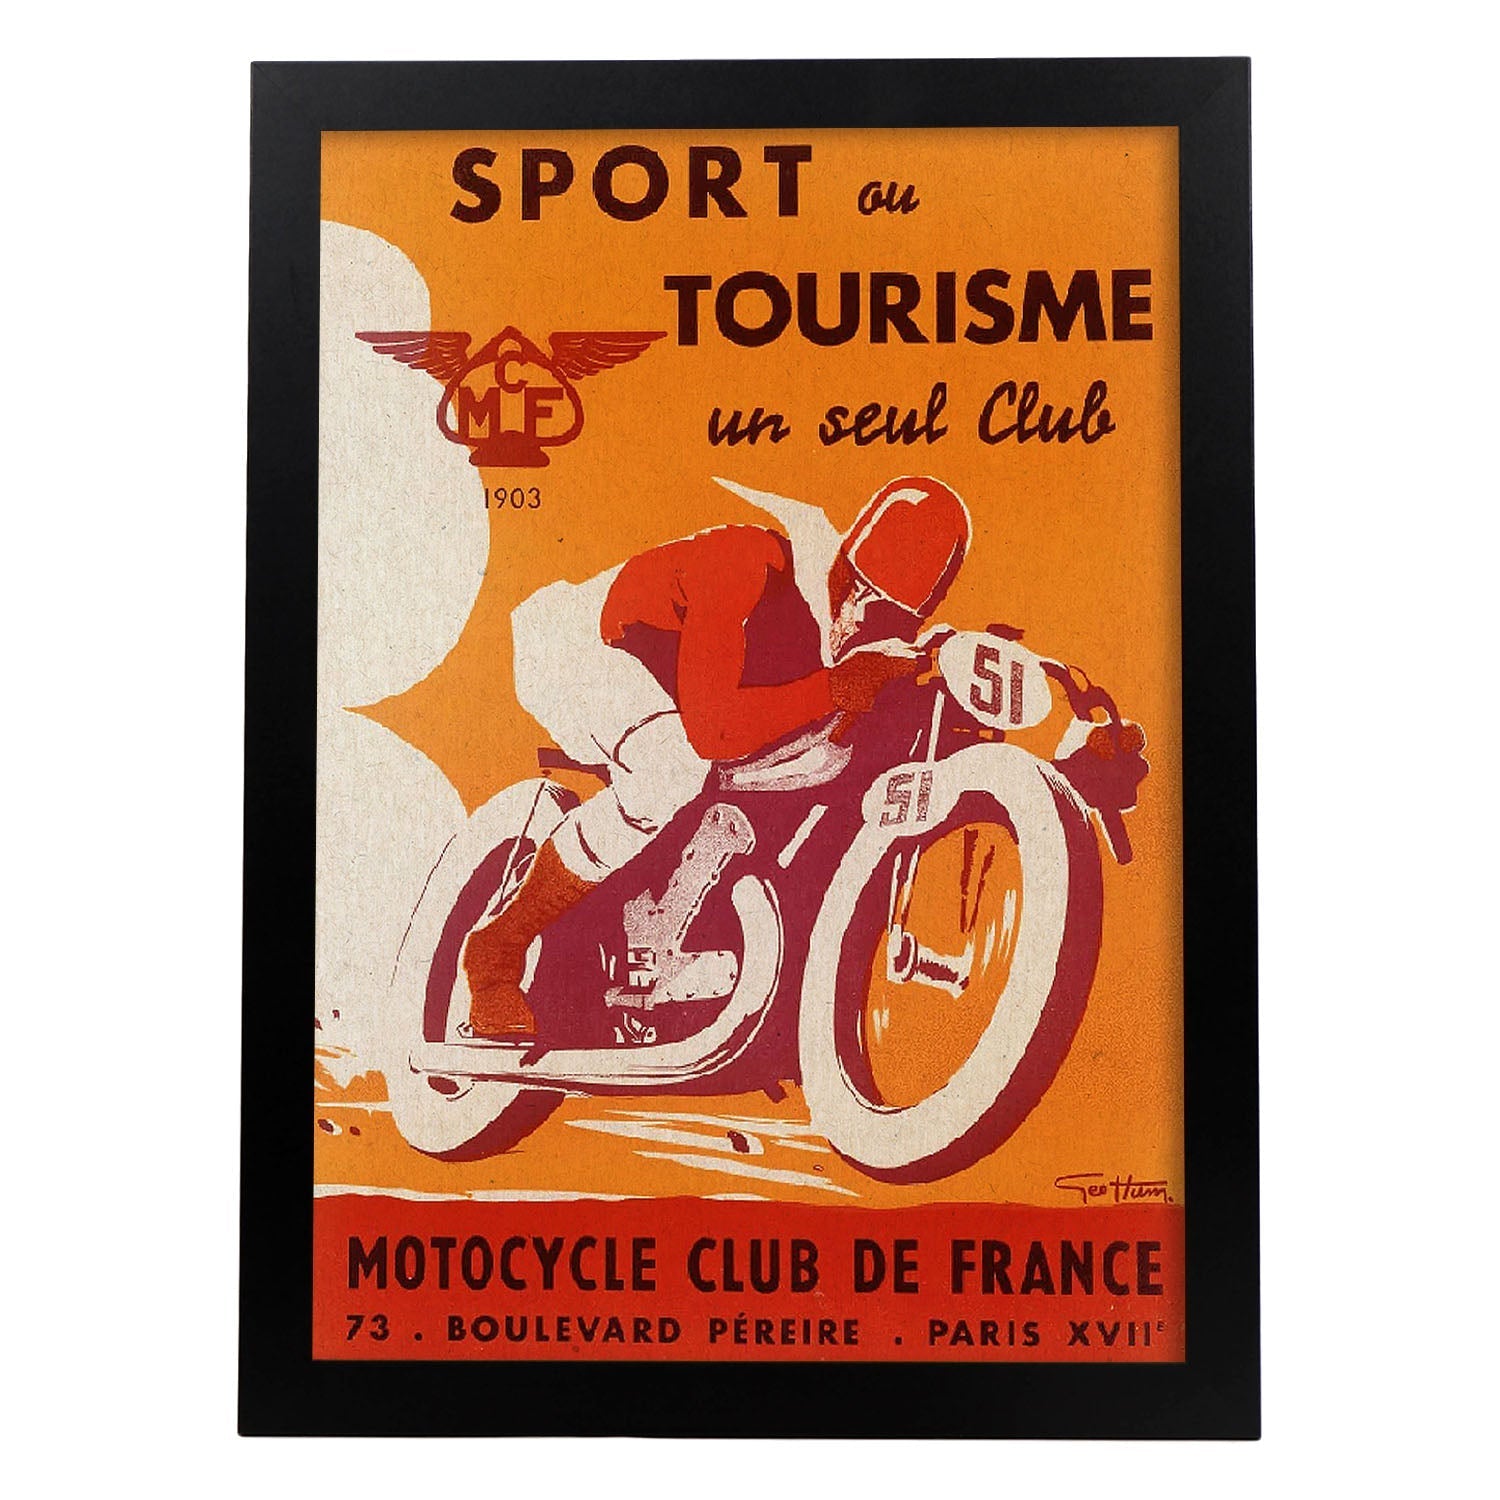 Poster vintage. Anuncio vintage del Sport ou Tourisme un seul Club Motorcycle Club de France.-Artwork-Nacnic-A3-Marco Negro-Nacnic Estudio SL